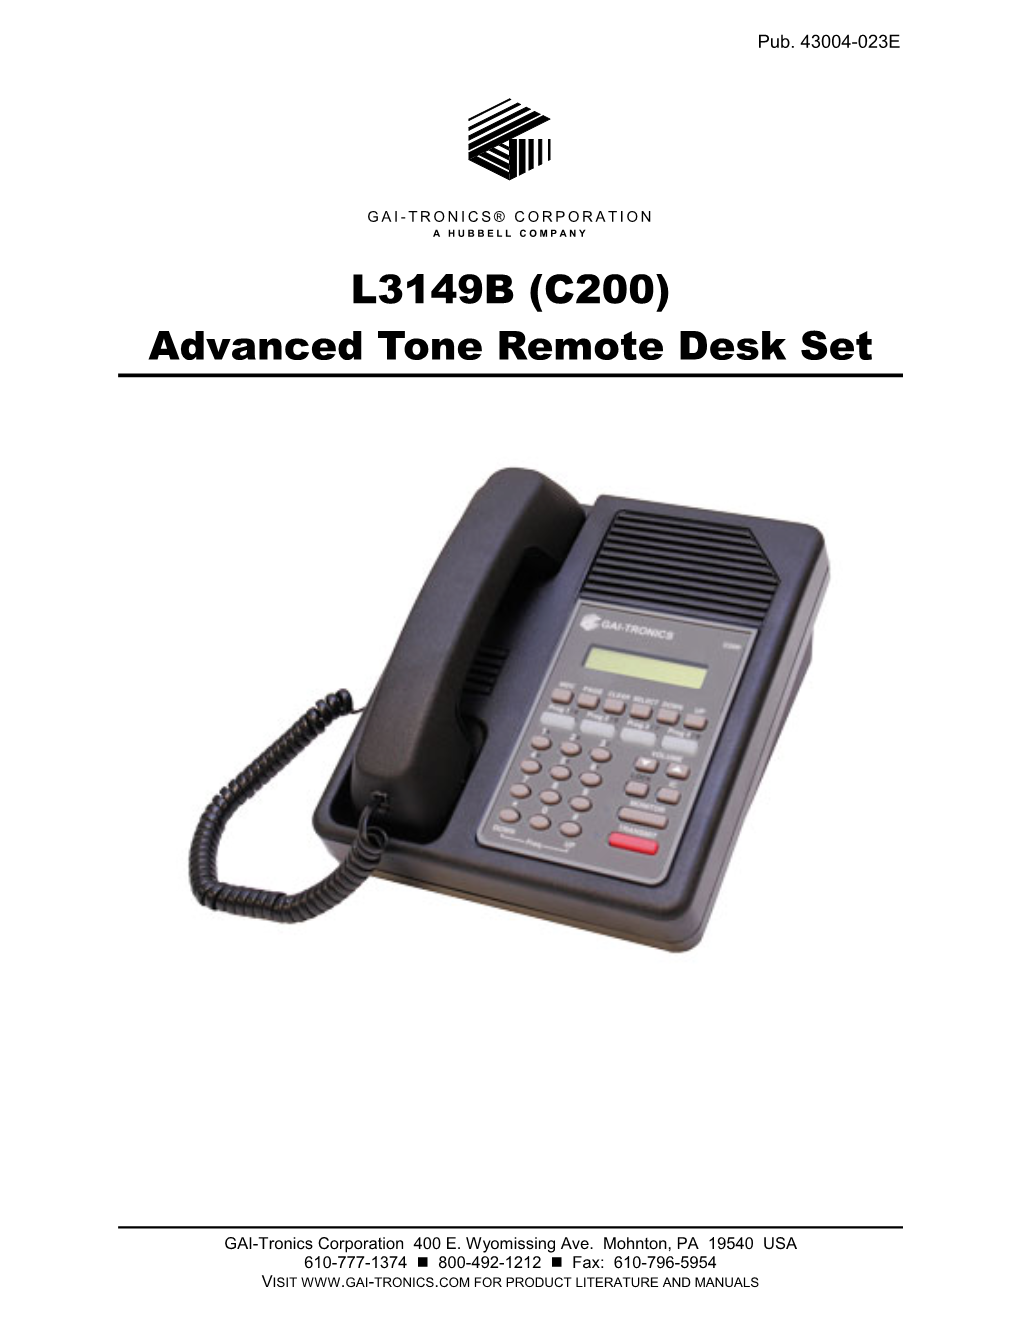 (C200) Advanced Tone Remote Desk Set Manual